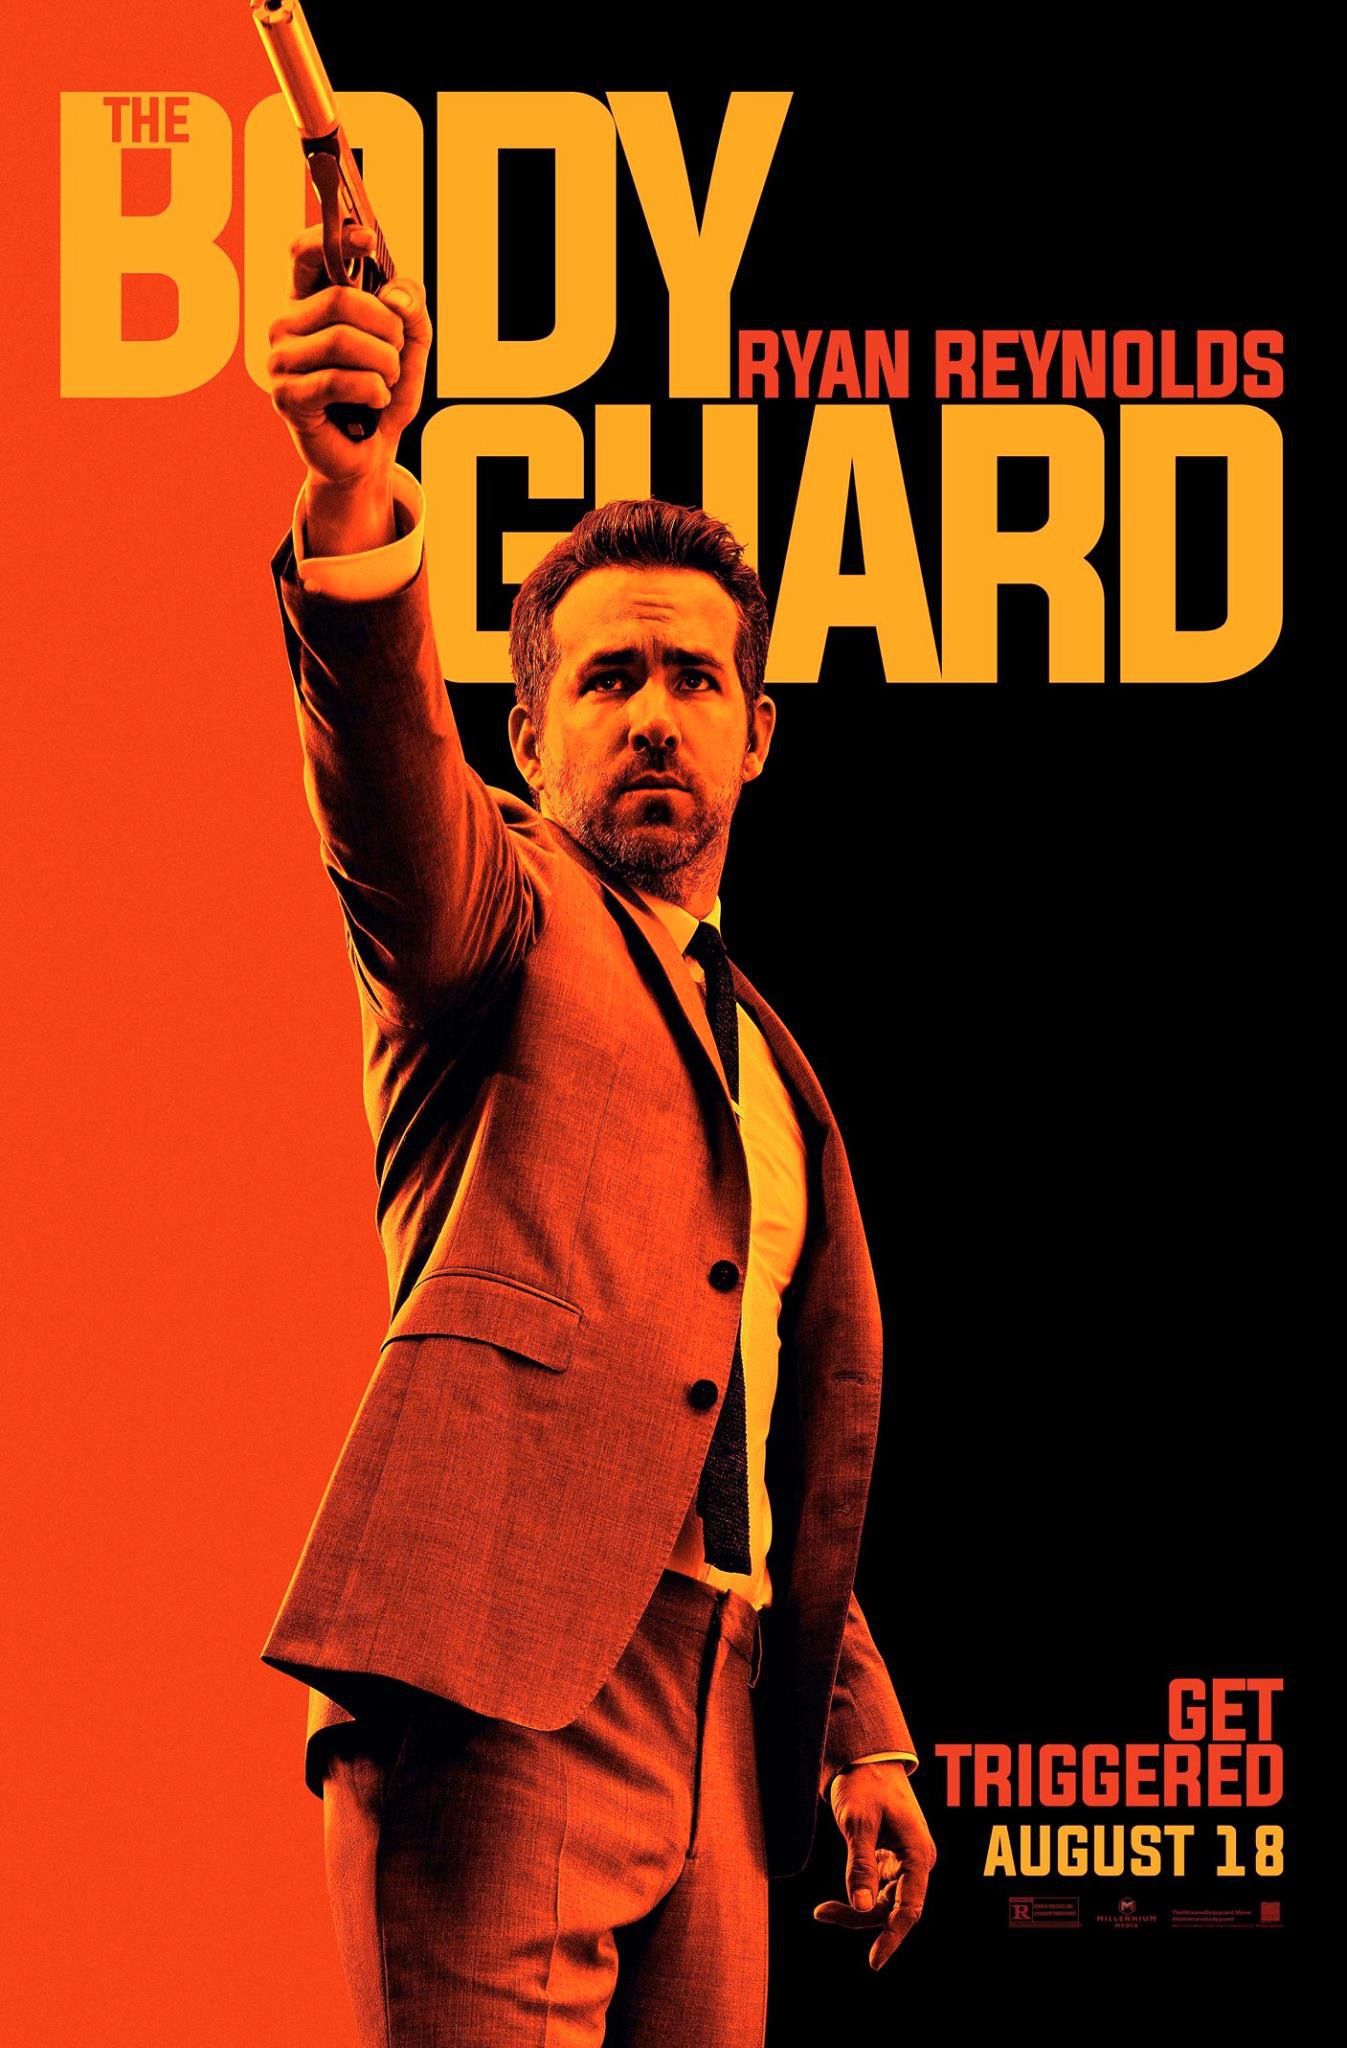 Hitmans Bodyguard Ryan Reynolds poster